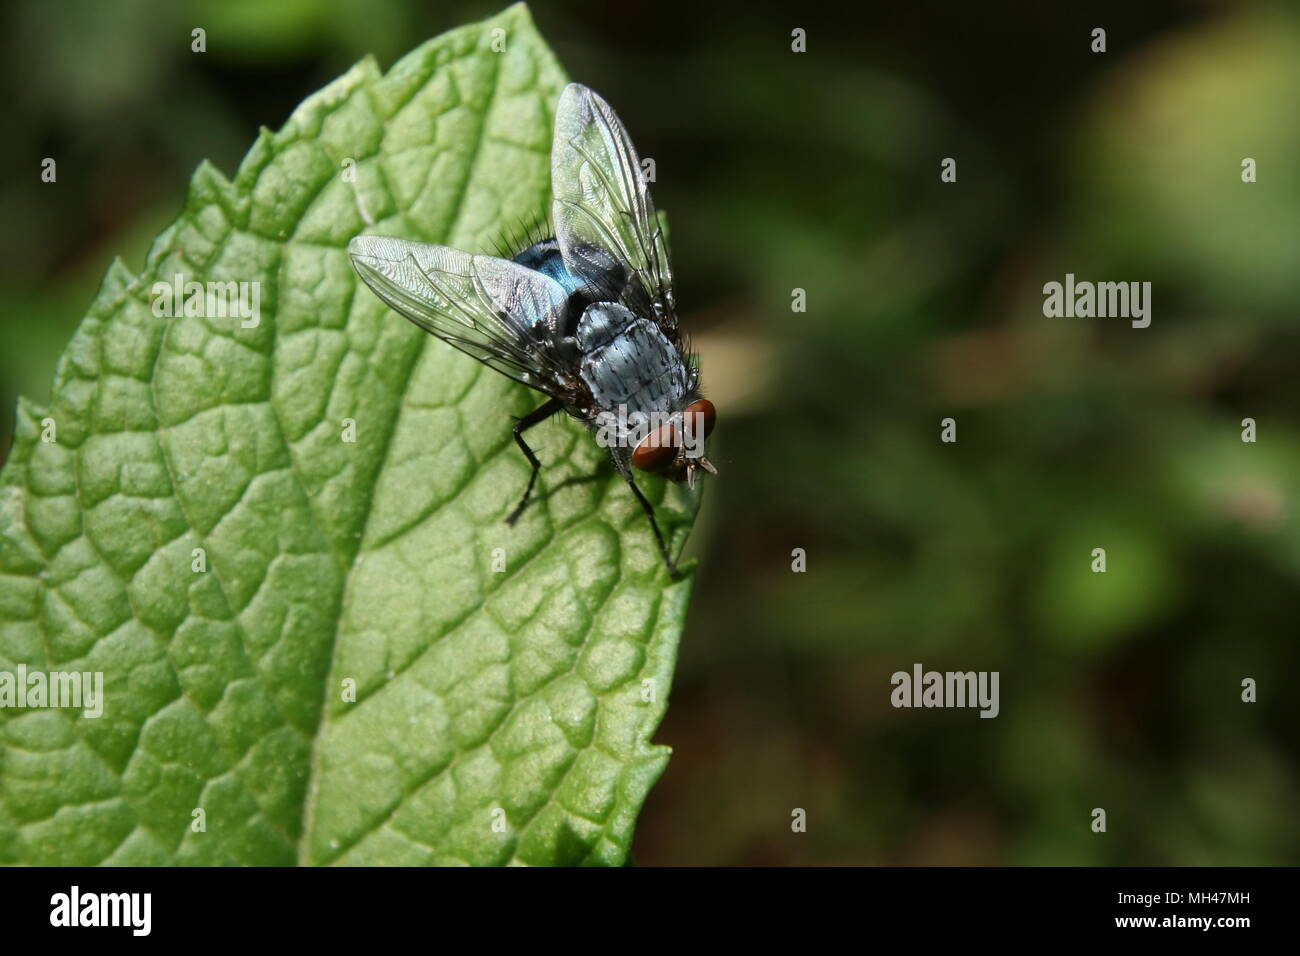 Blowfly on a Mint leaf Stock Photo